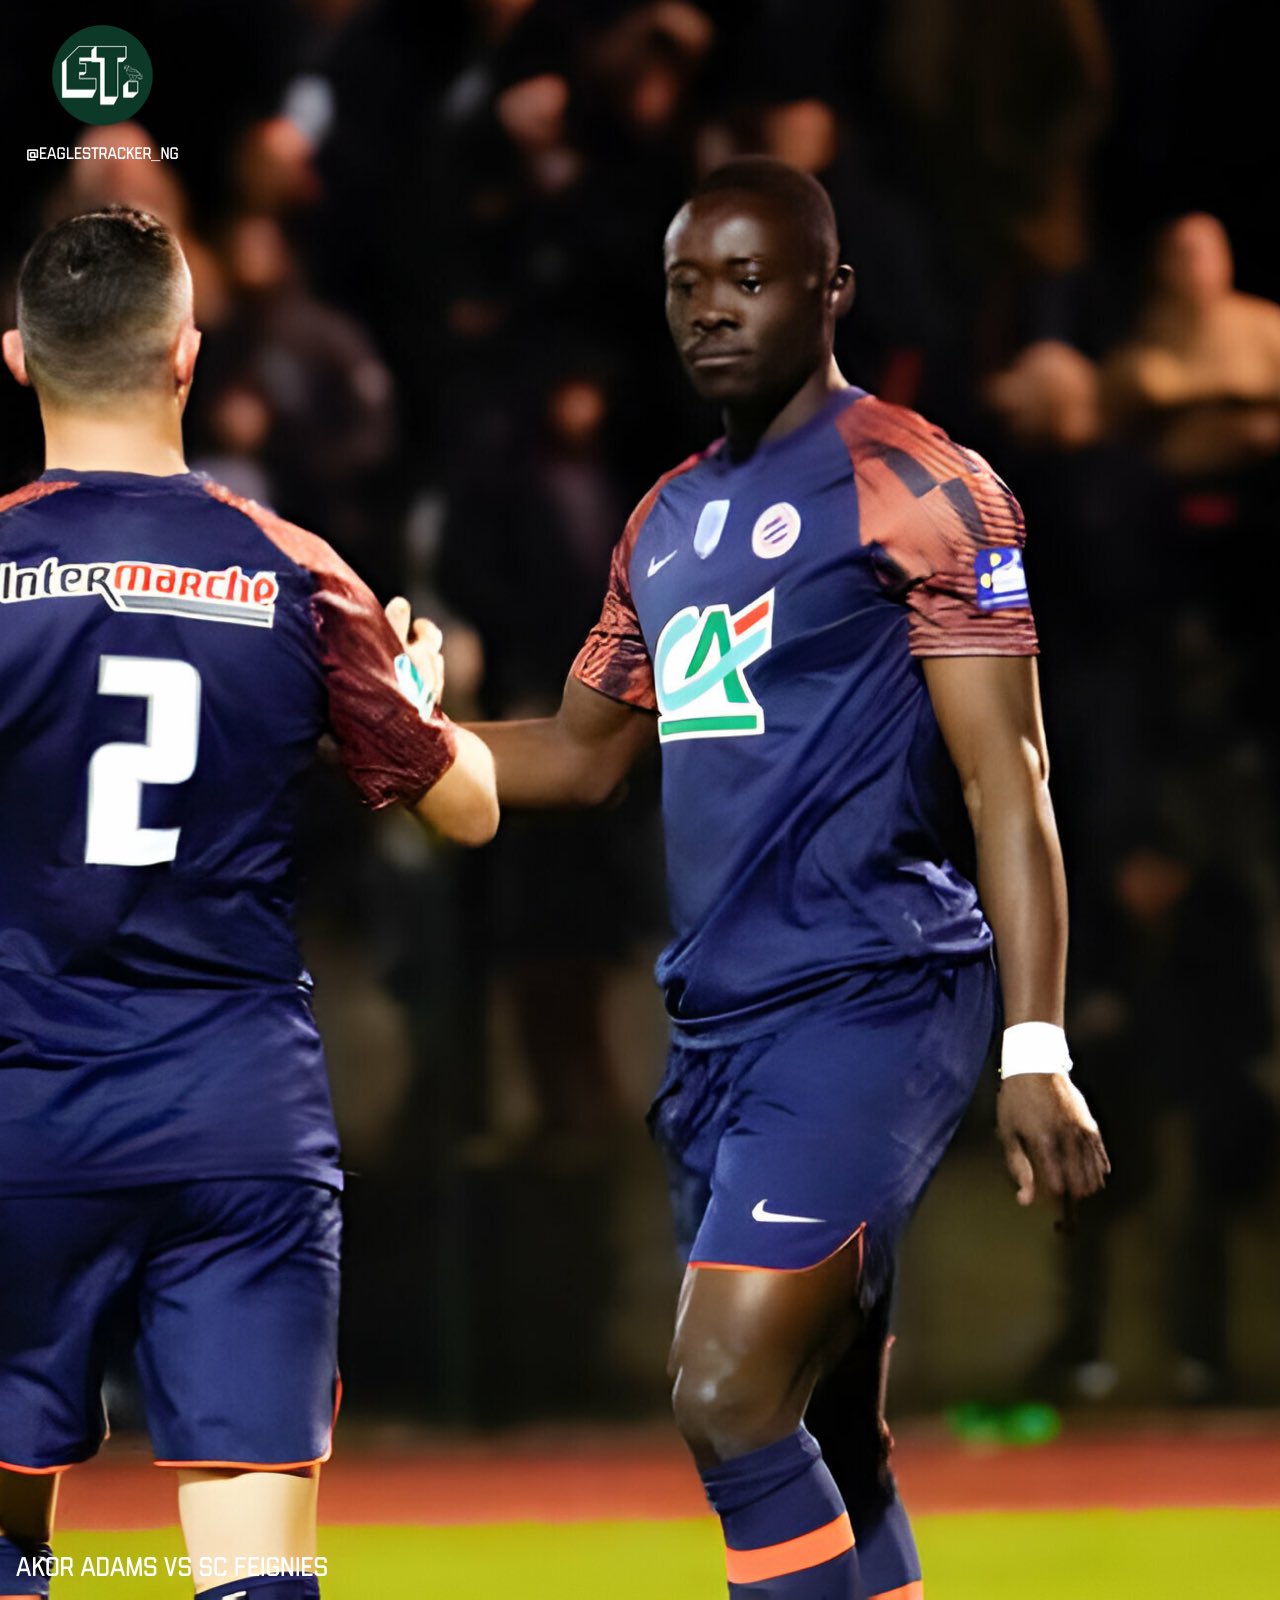 Coupe De France:  Adams propels Montpelier to win